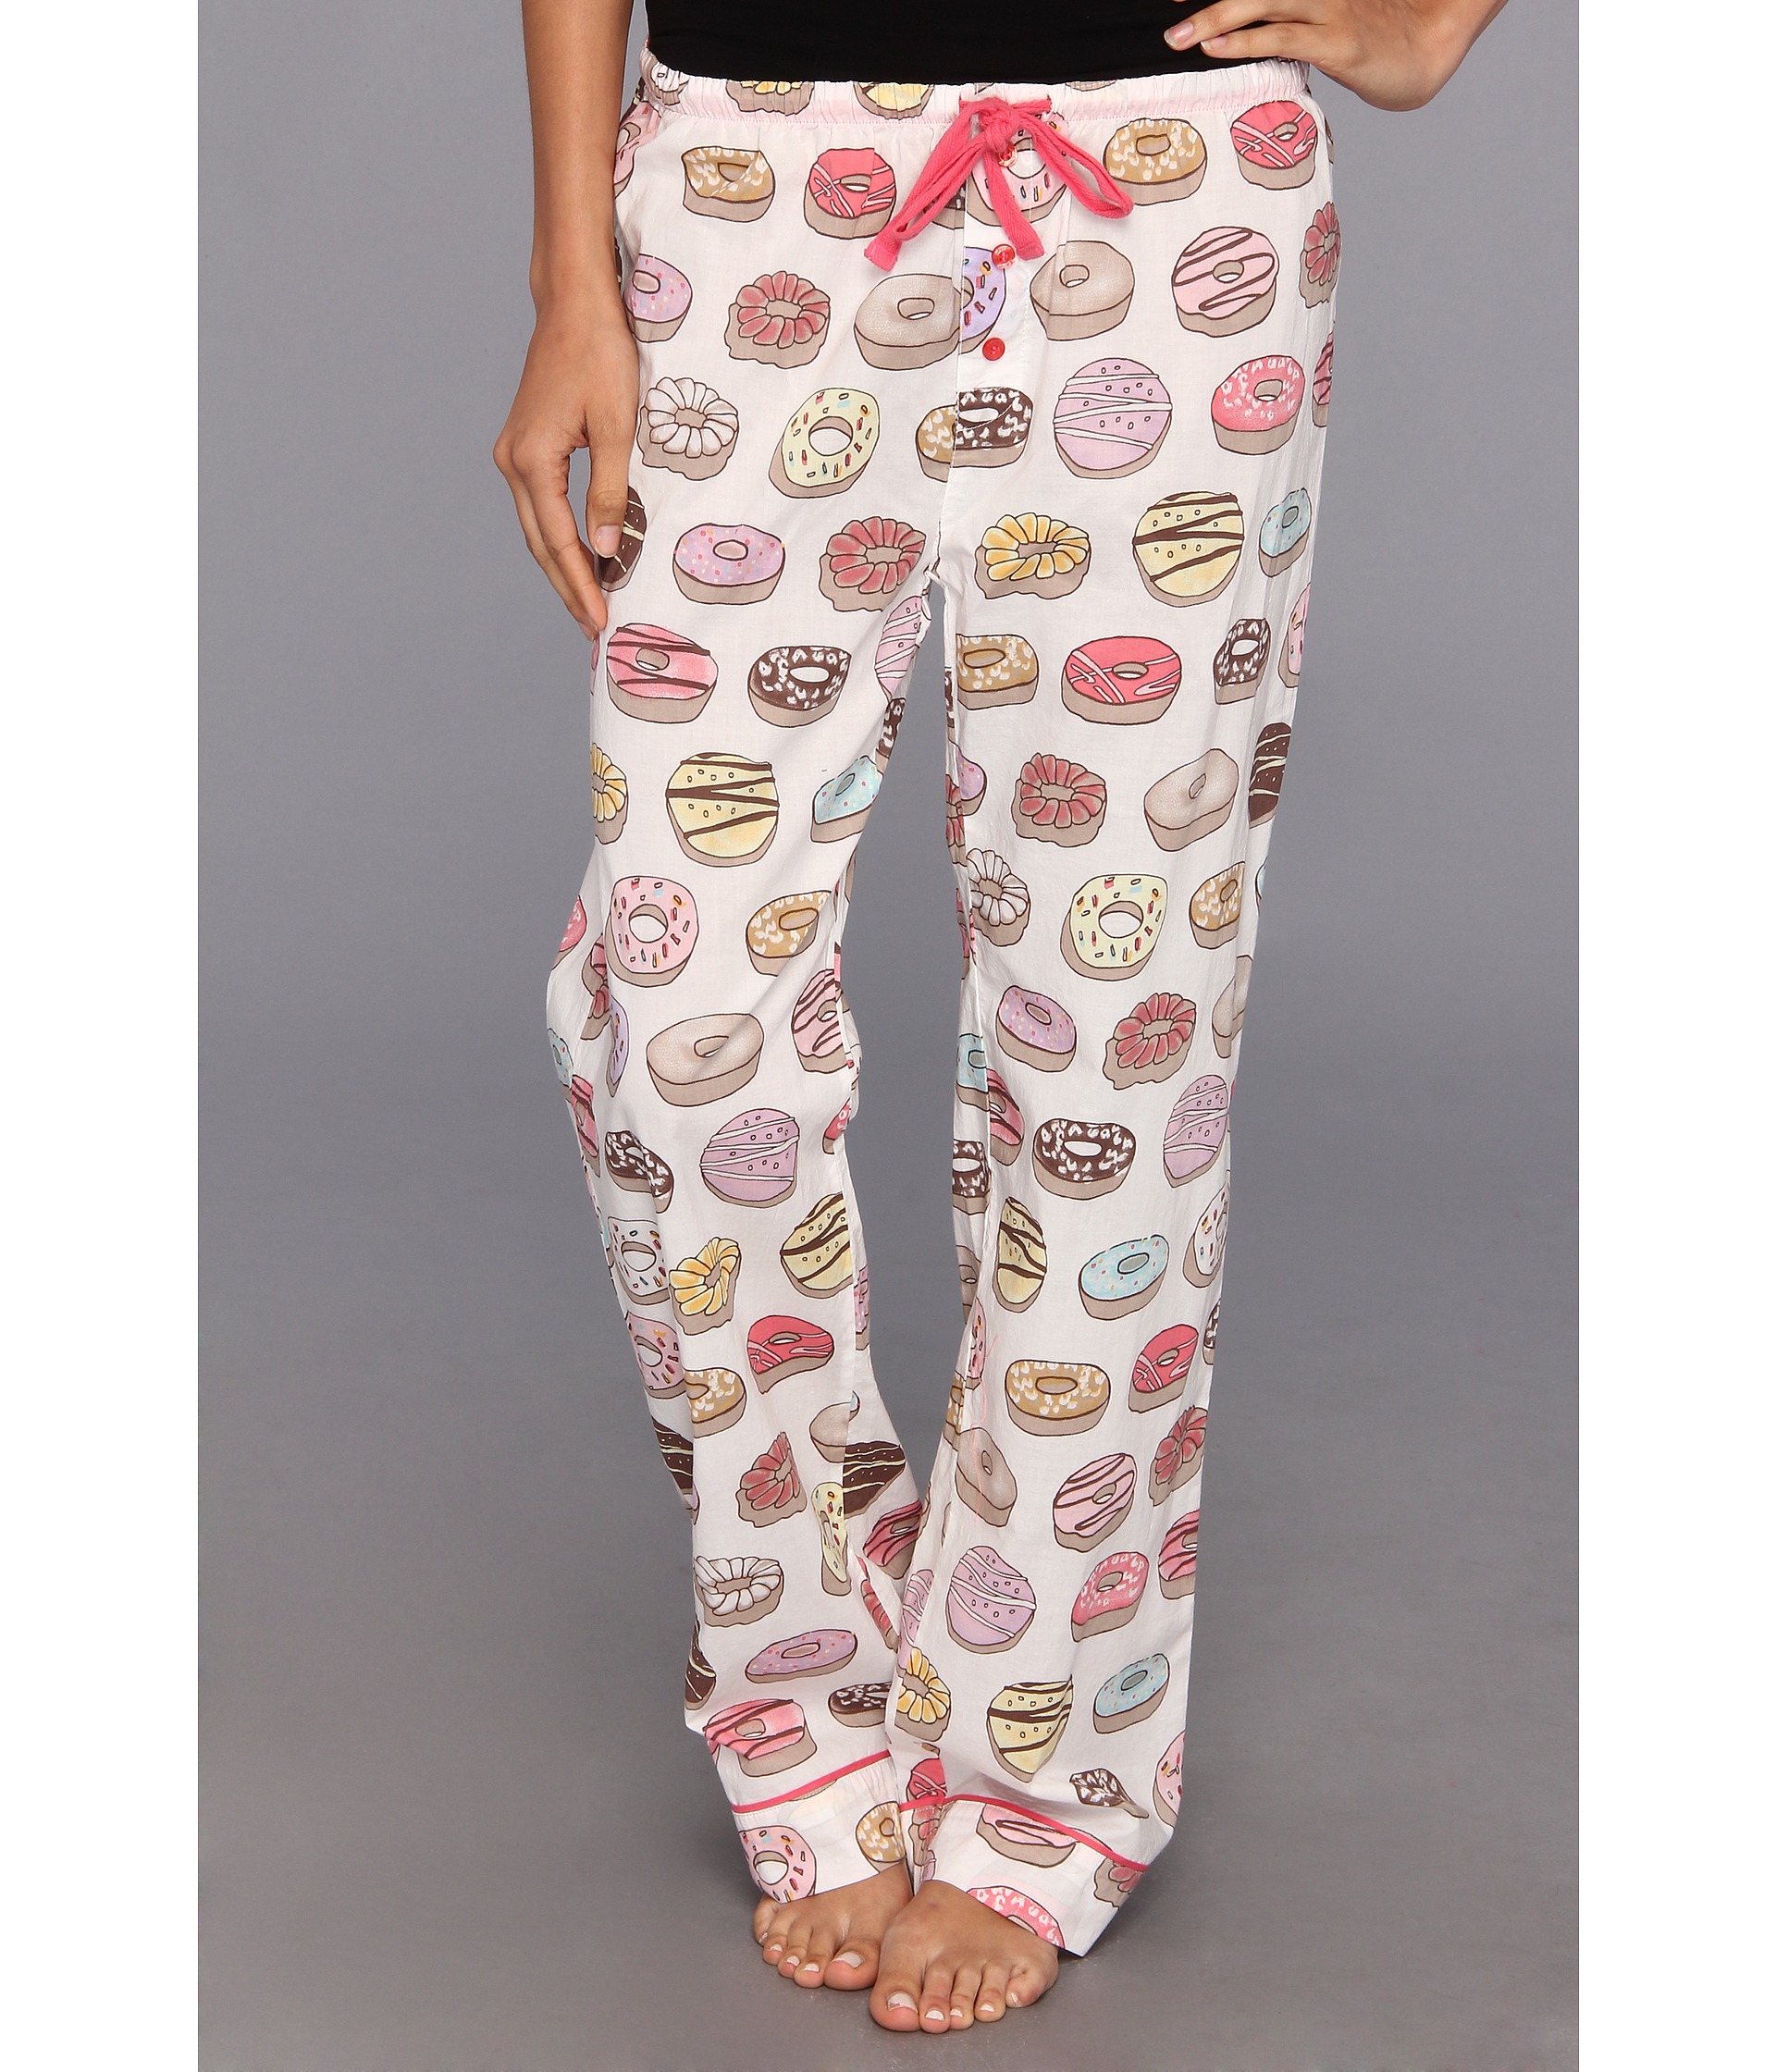 P J Salvage Playful Prints Donuts Pajama Set | Shipped Free at Zappos